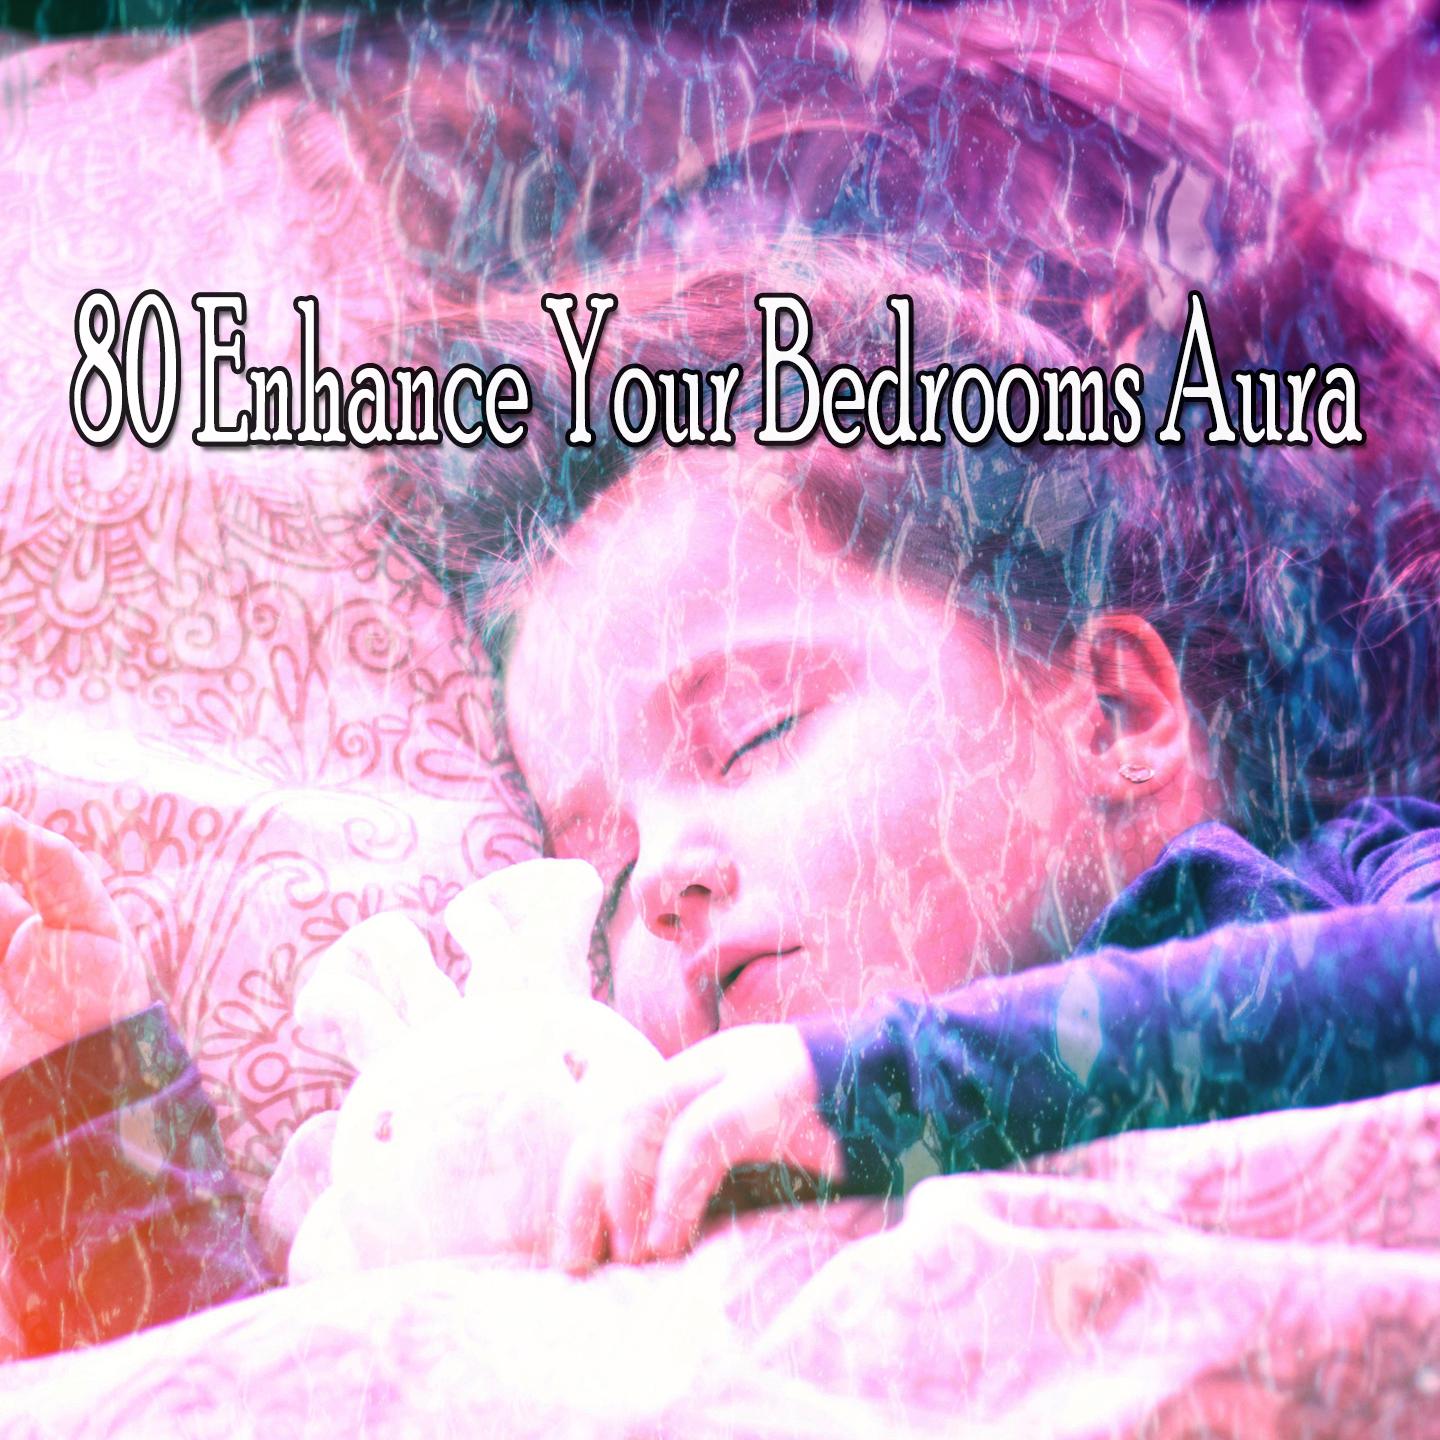 80 Enhance Your Bedrooms Aura